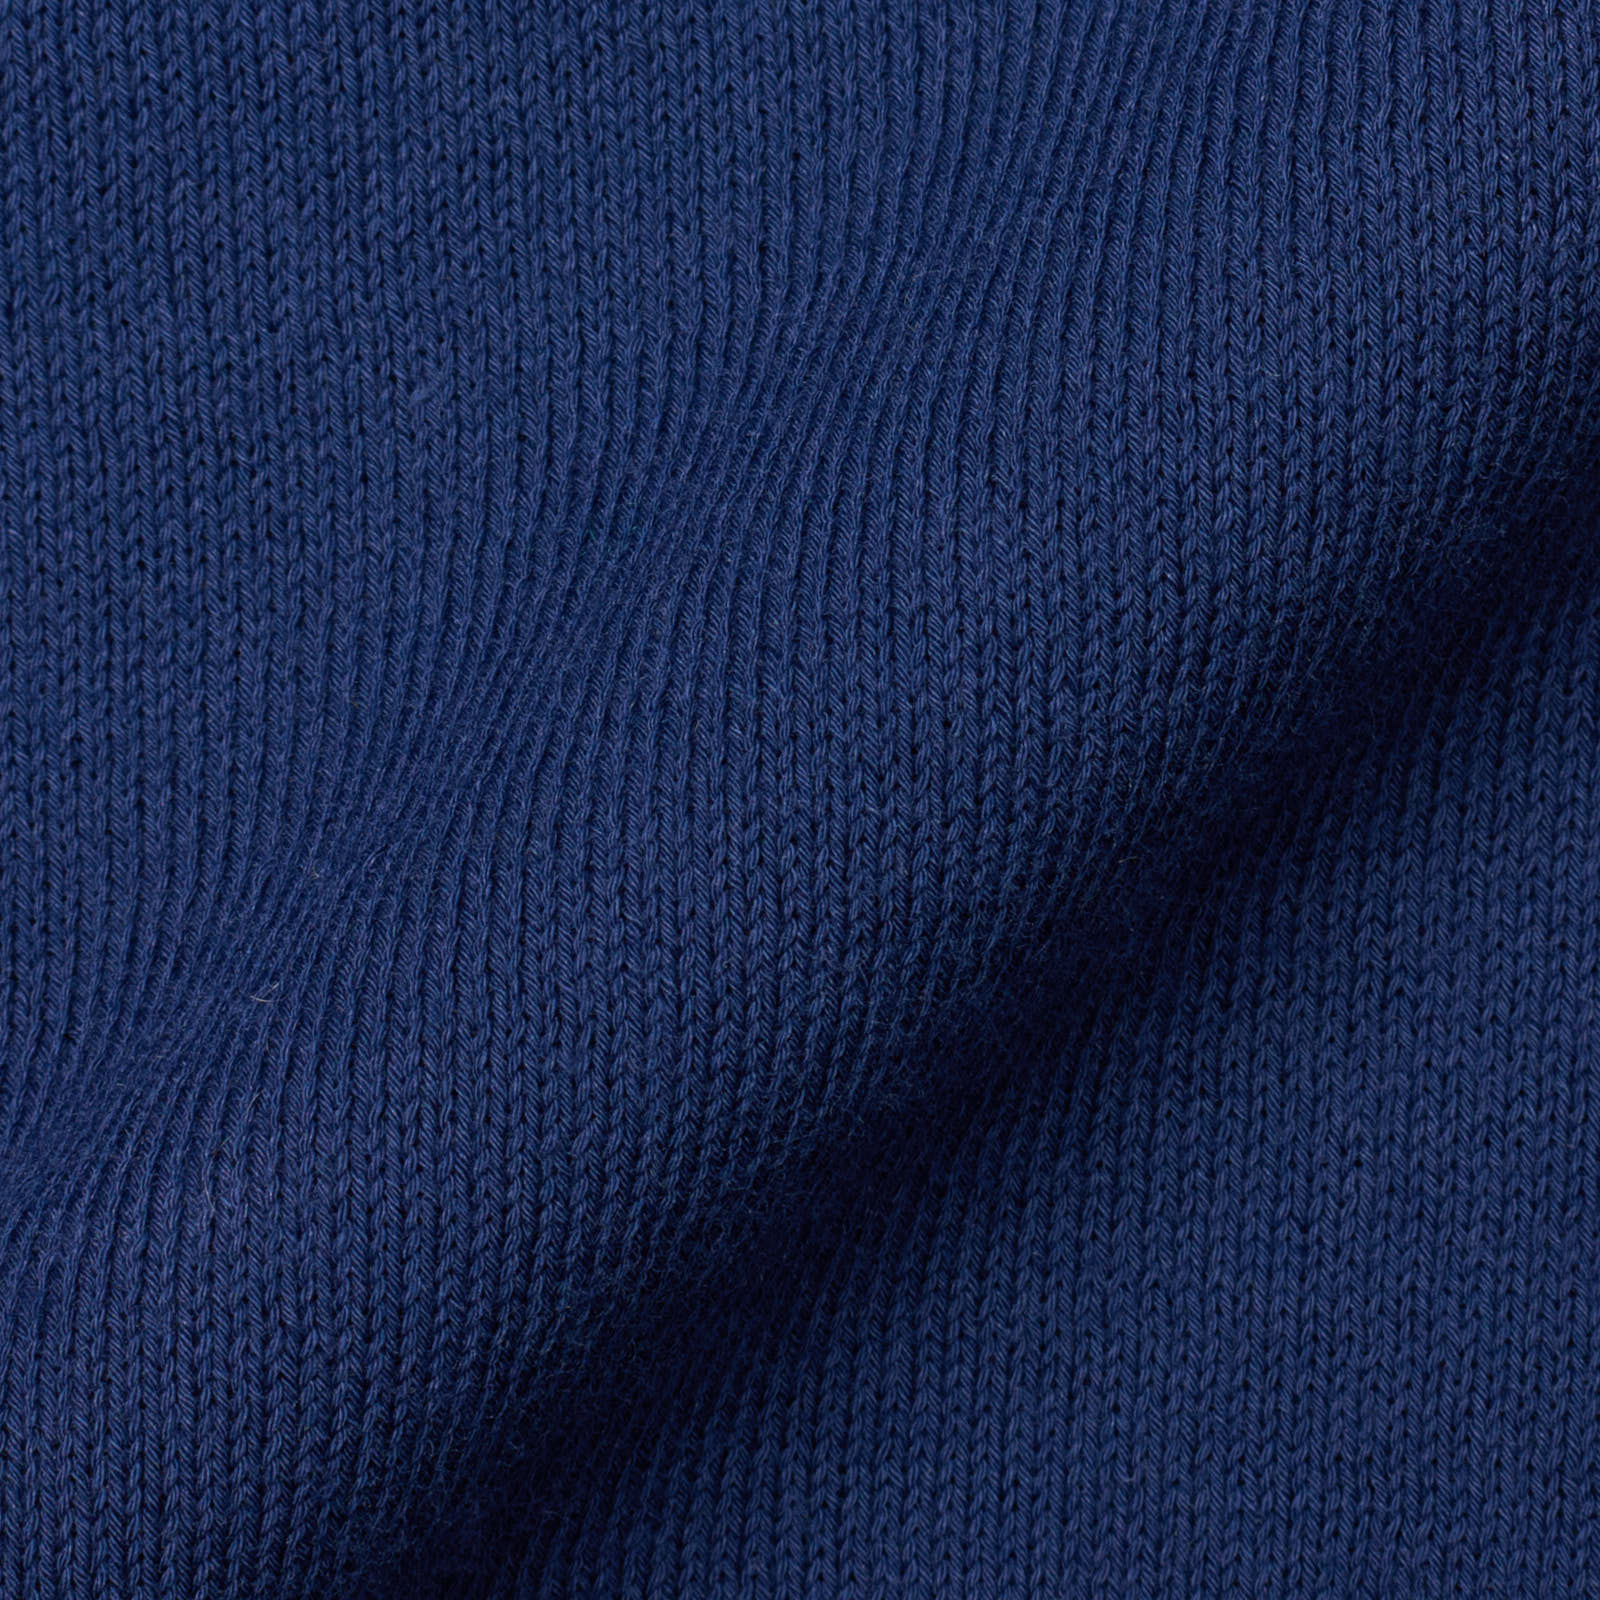 GRAN SASSO for VANNUCCI Navy Blue Cotton Knit DB Vest Waistcoat NEW